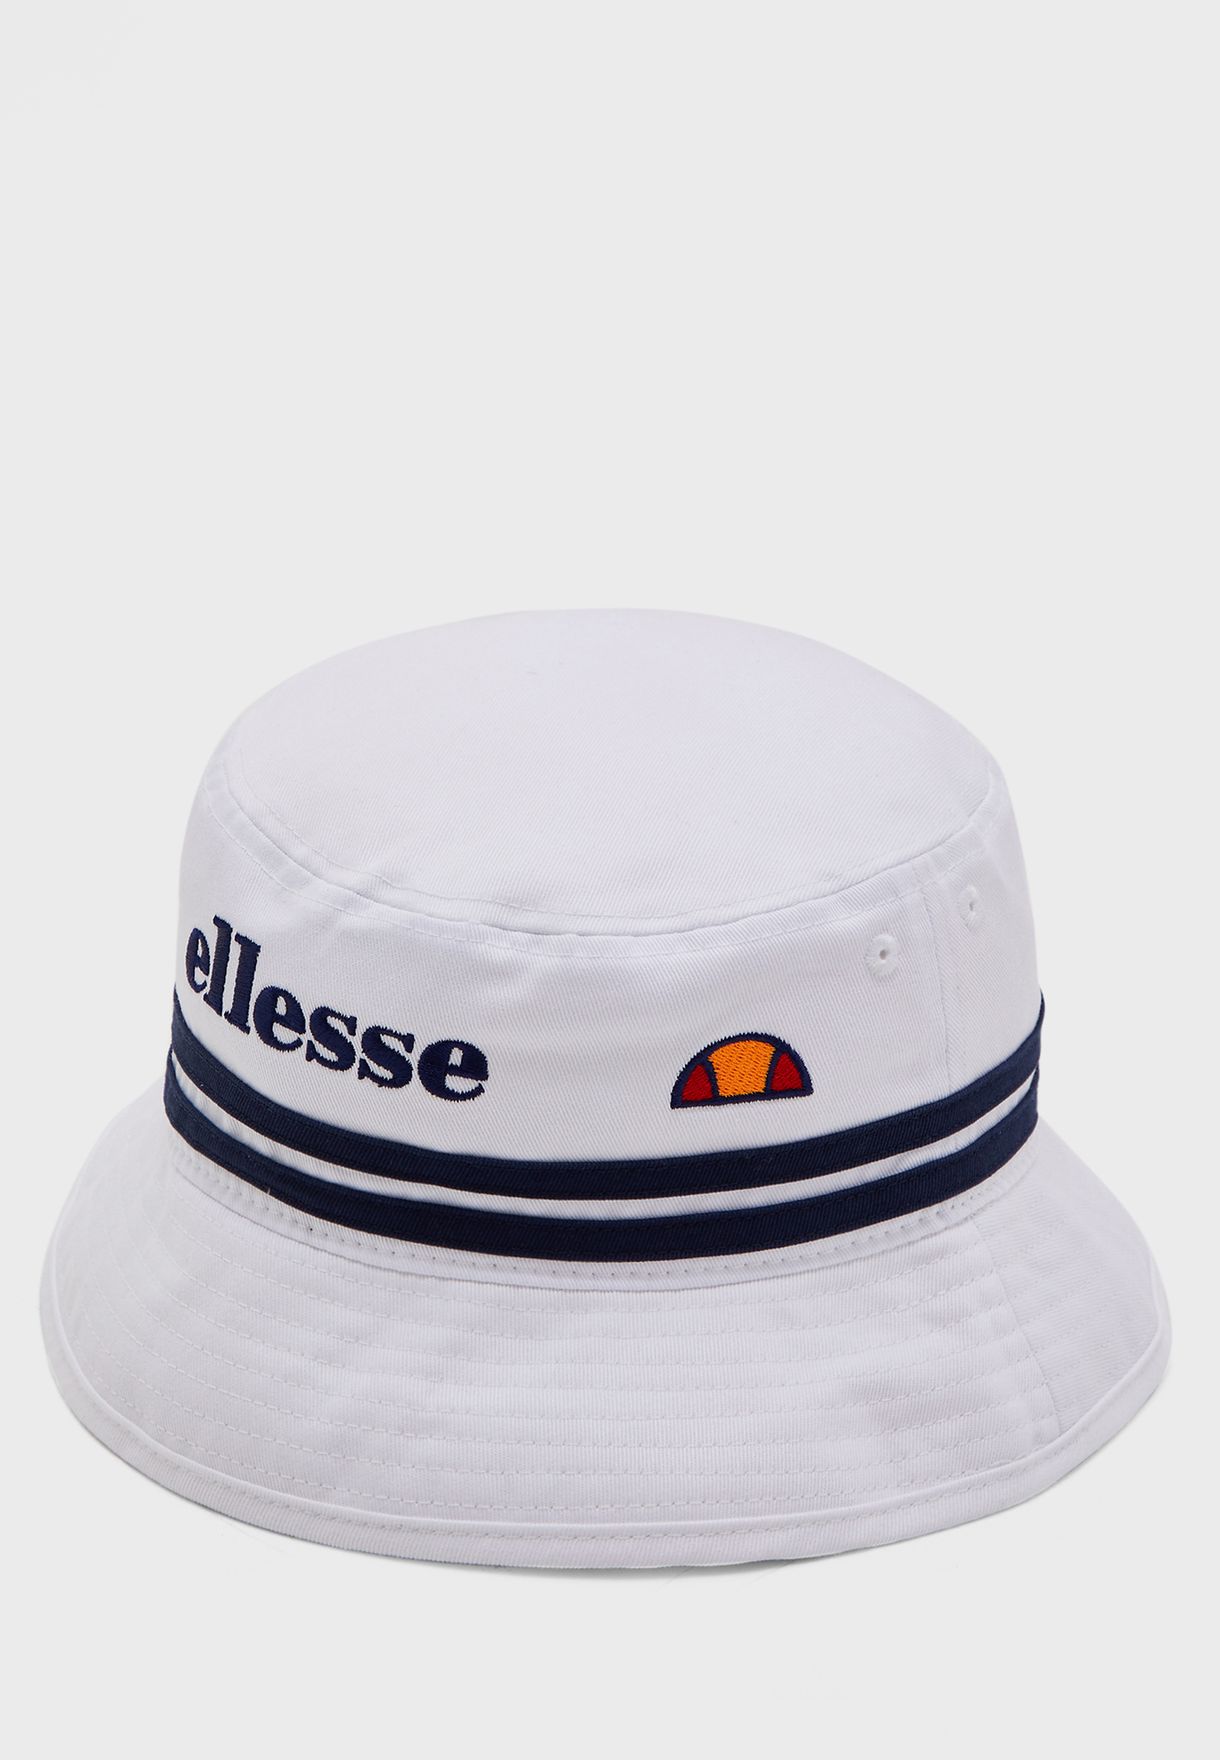 Ellesse Lorenzo Bucket Hat Sombrero Unisex Adulto